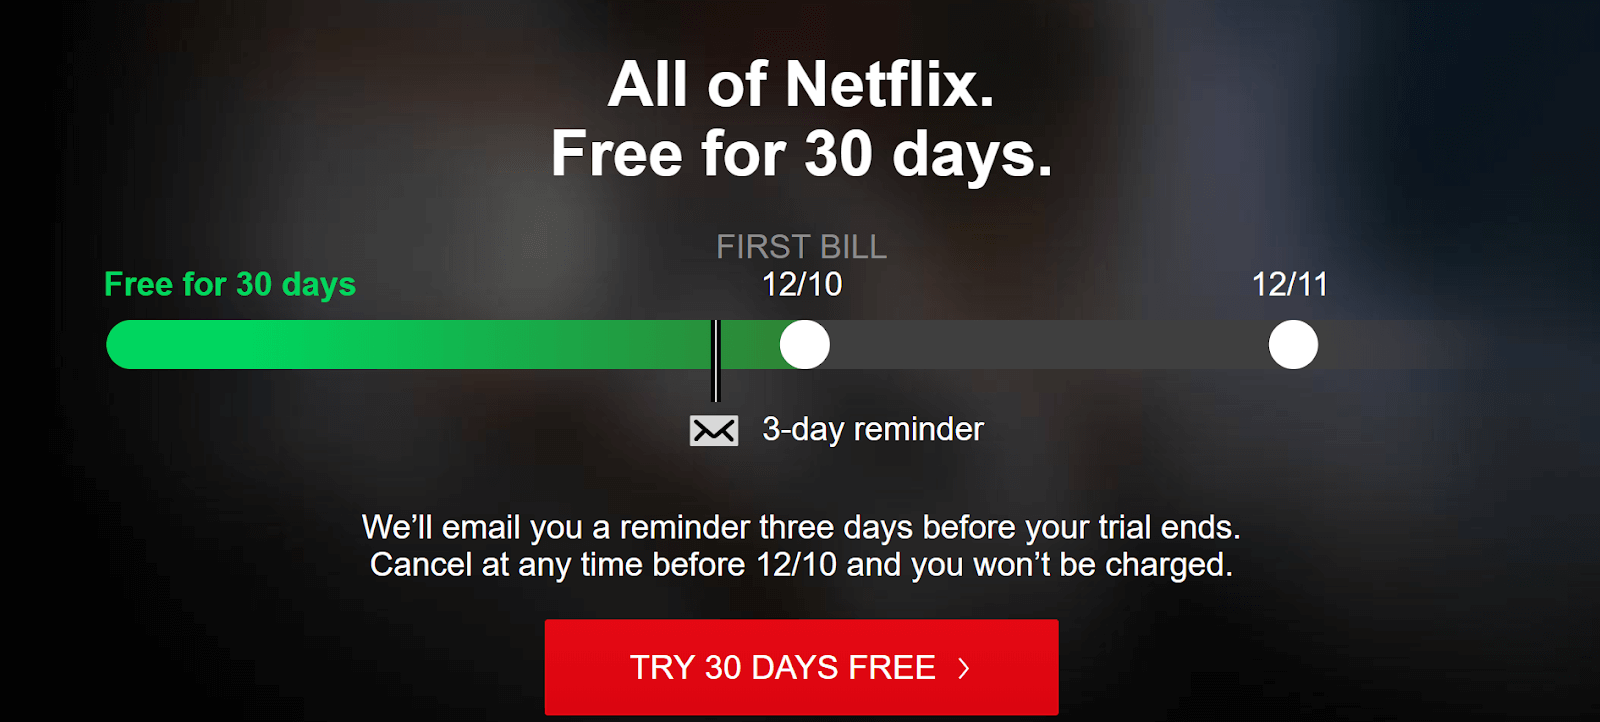 Netflix improve customer service